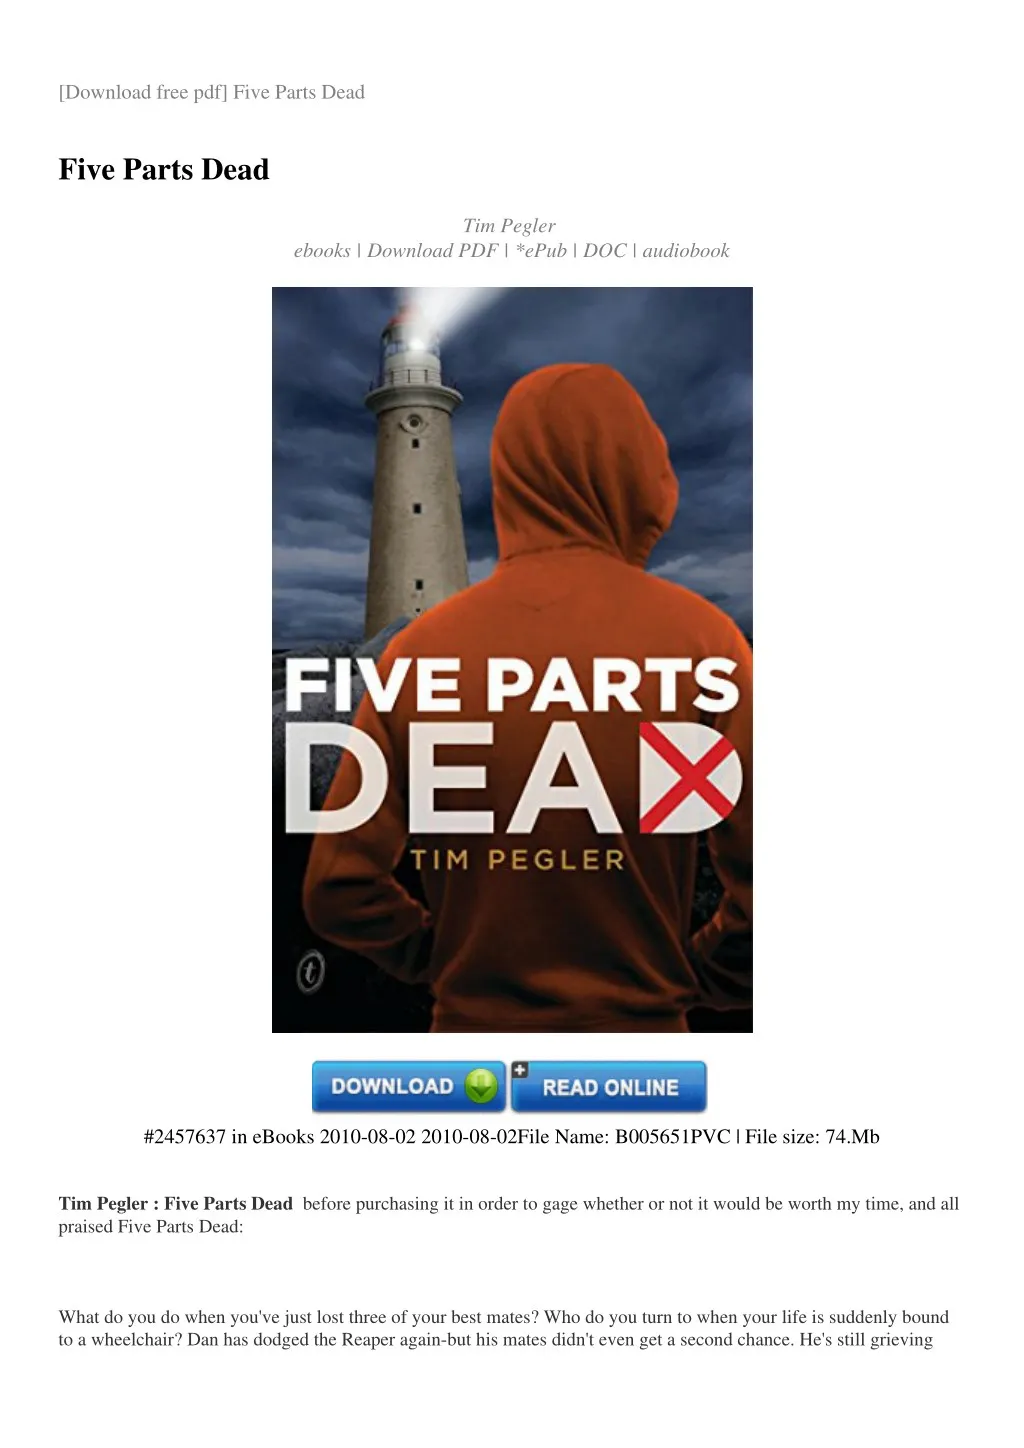 download free pdf five parts dead